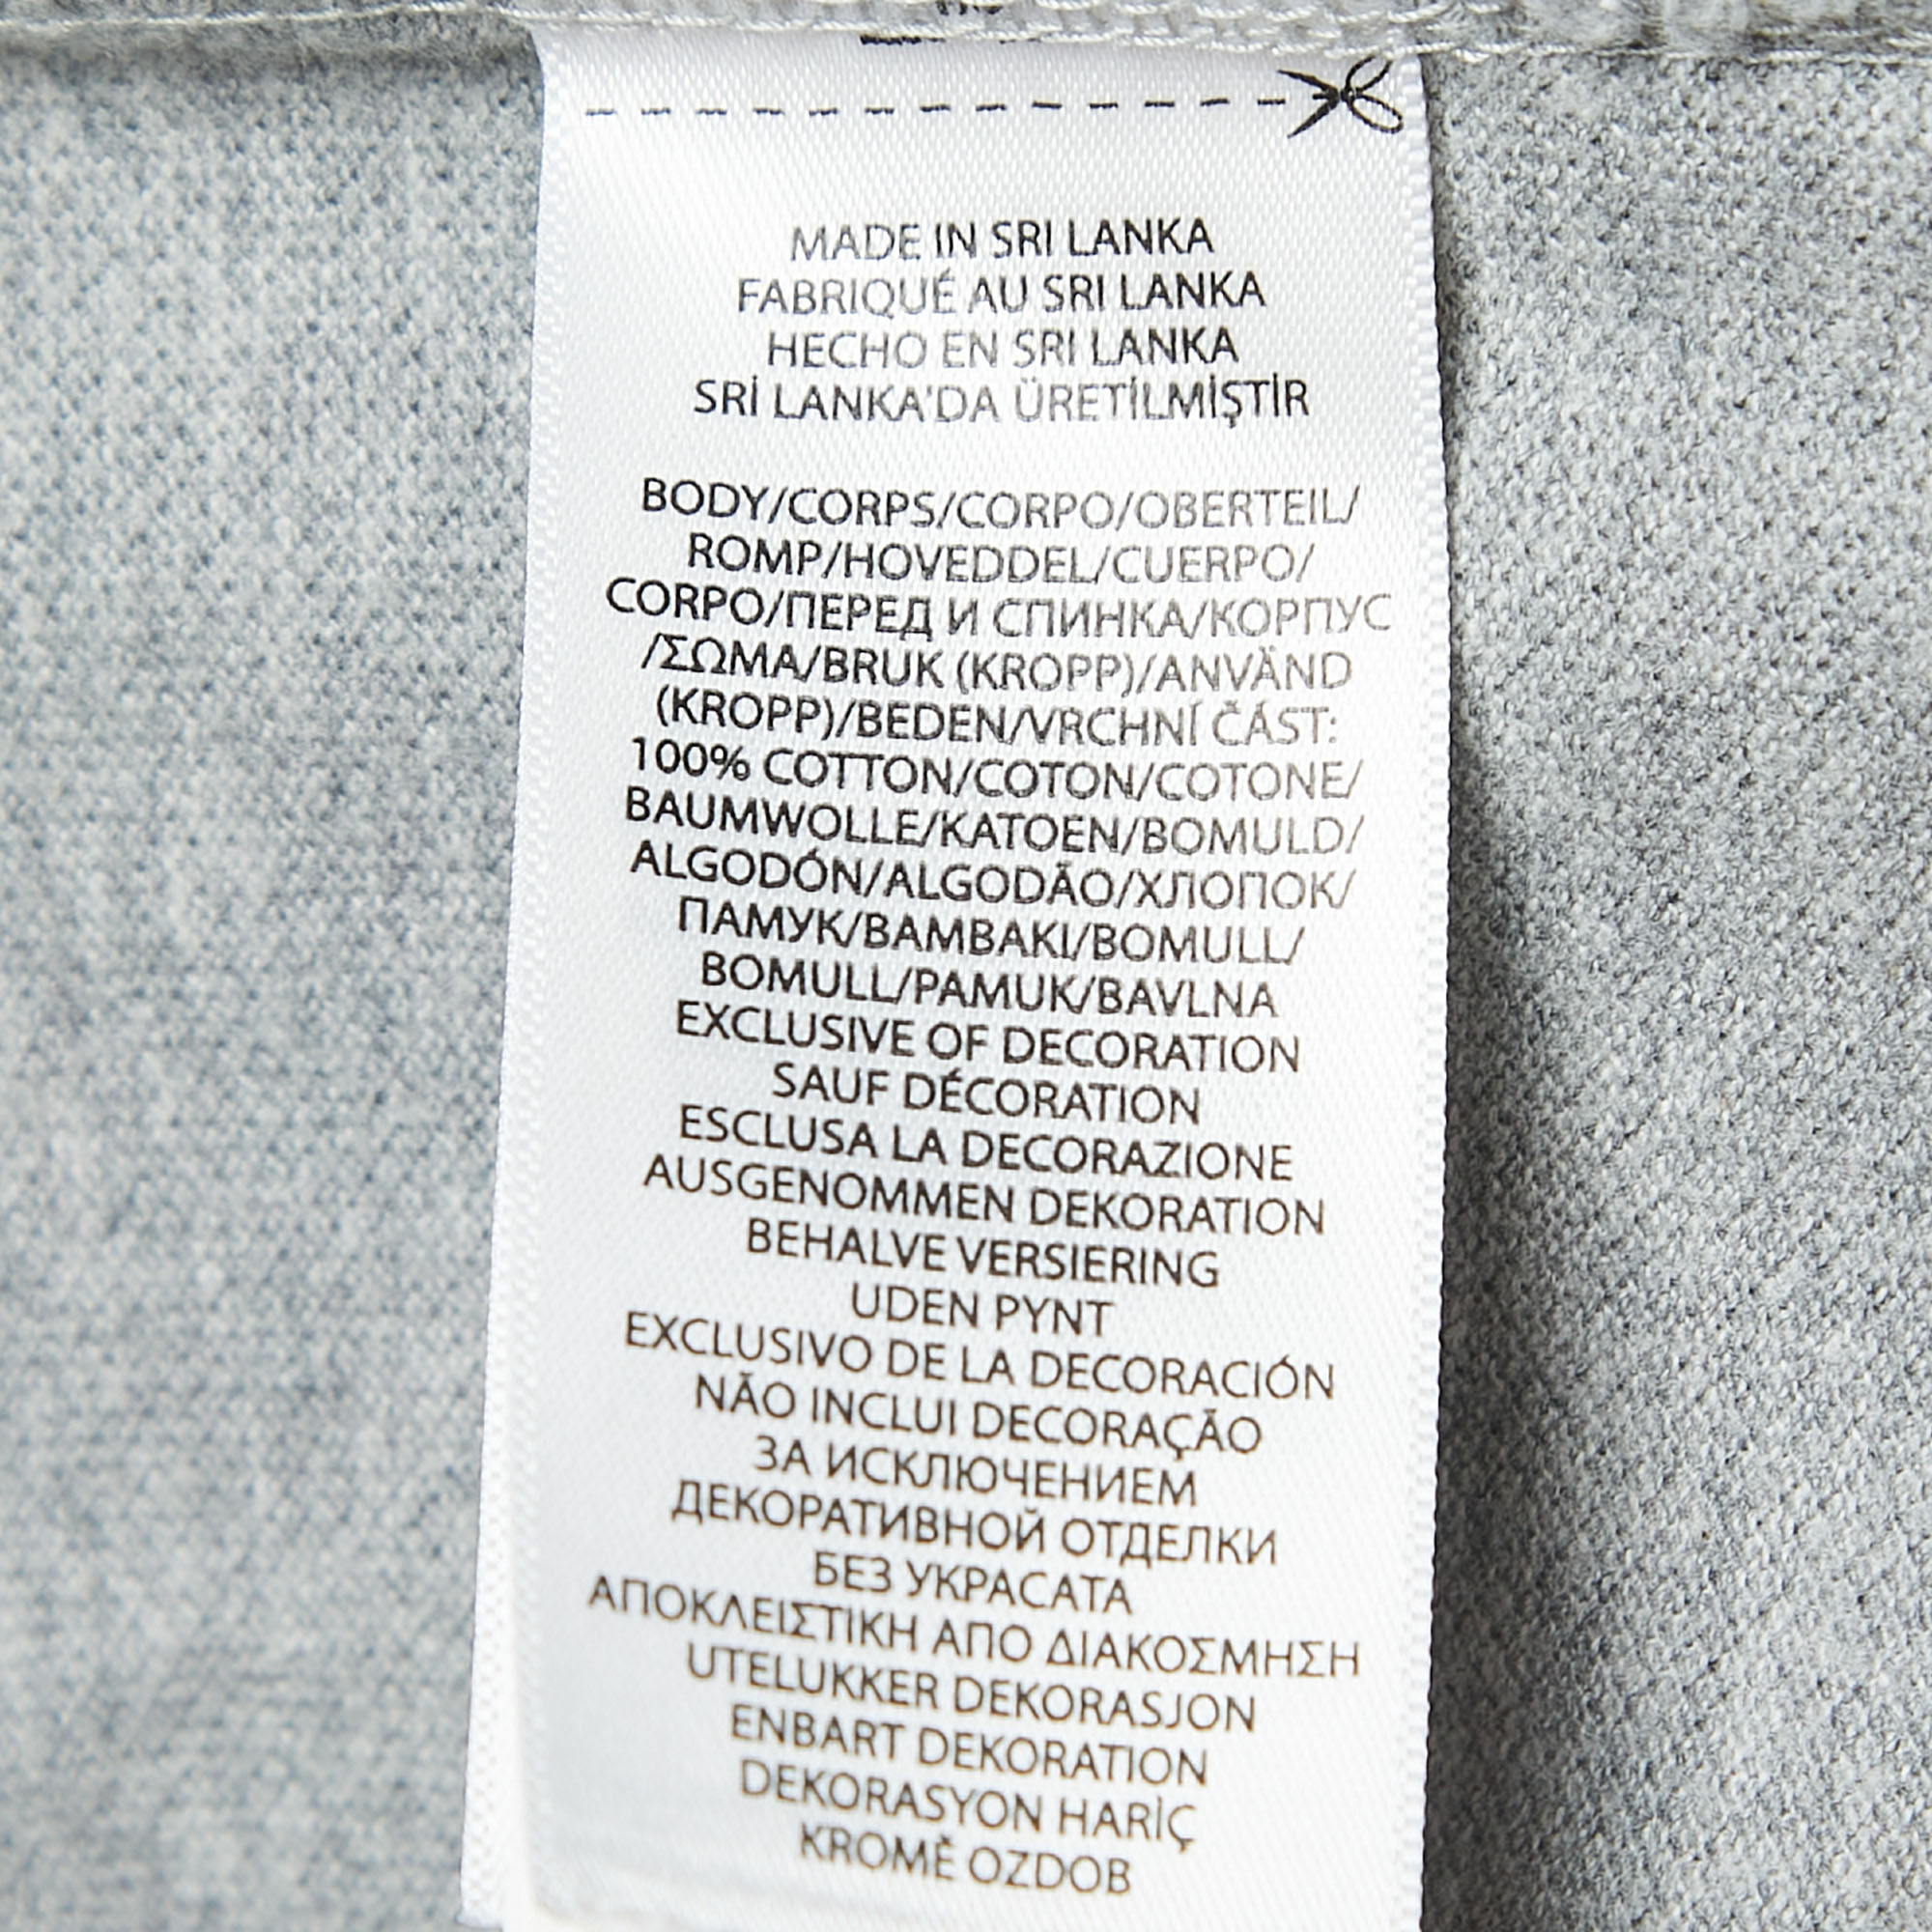 Polo Ralph Lauren Grey Logo Embroidered Cotton Polo T-Shirt L